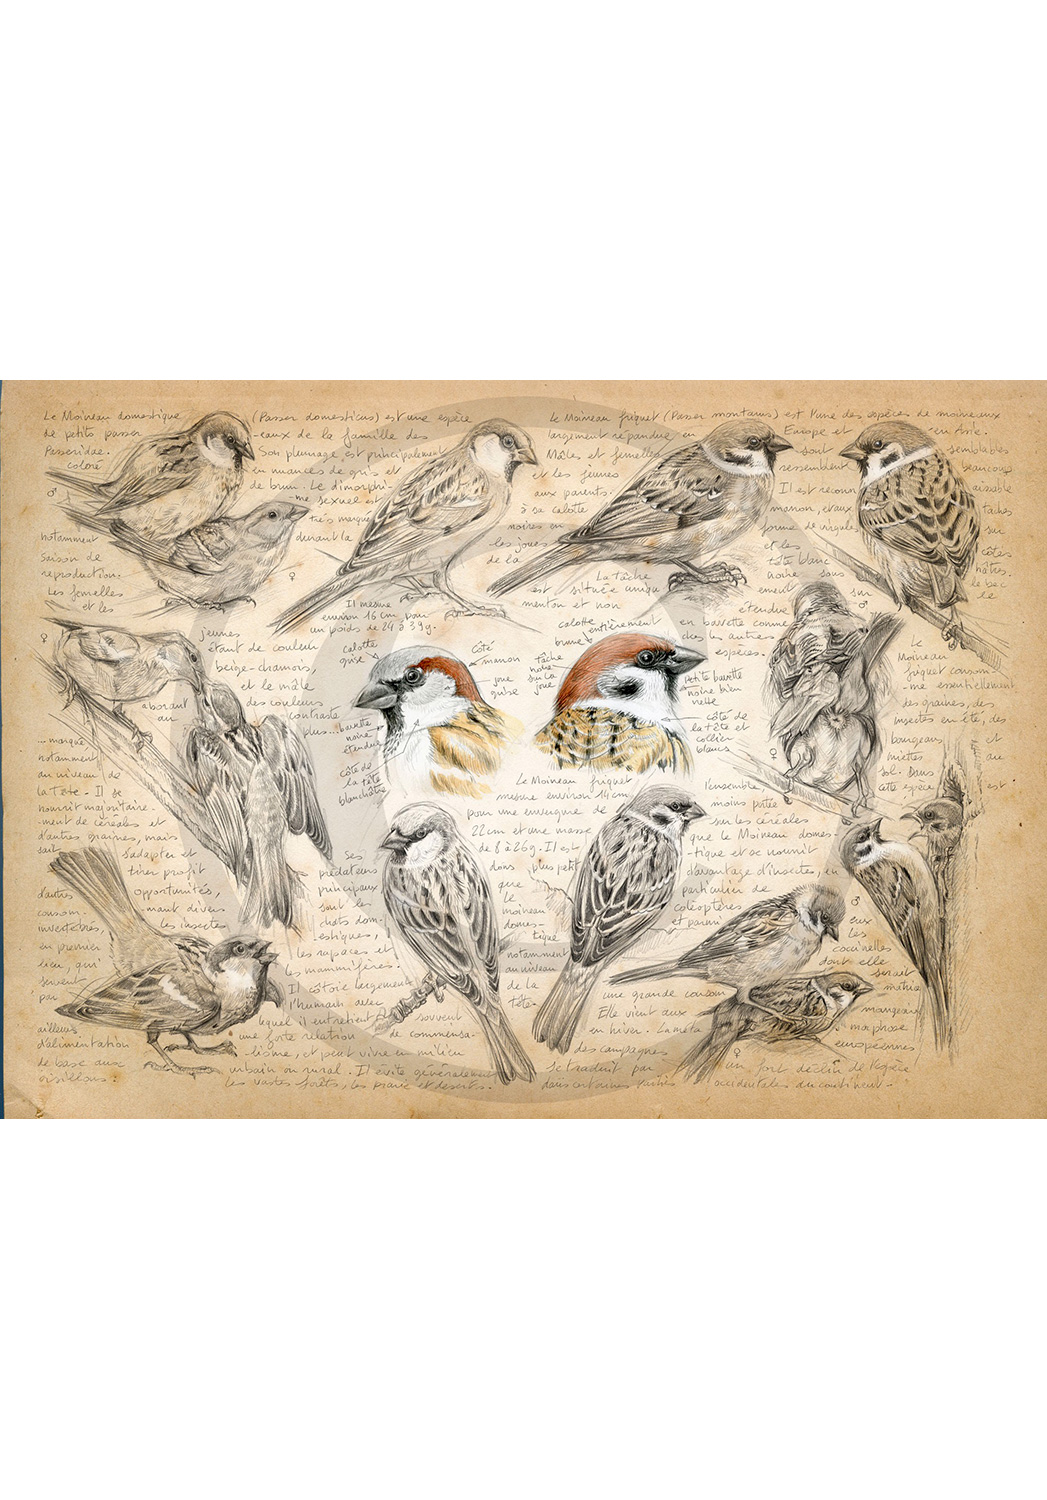 Marcello-art: Ornithology 333 - House sparrow and tree sparrow